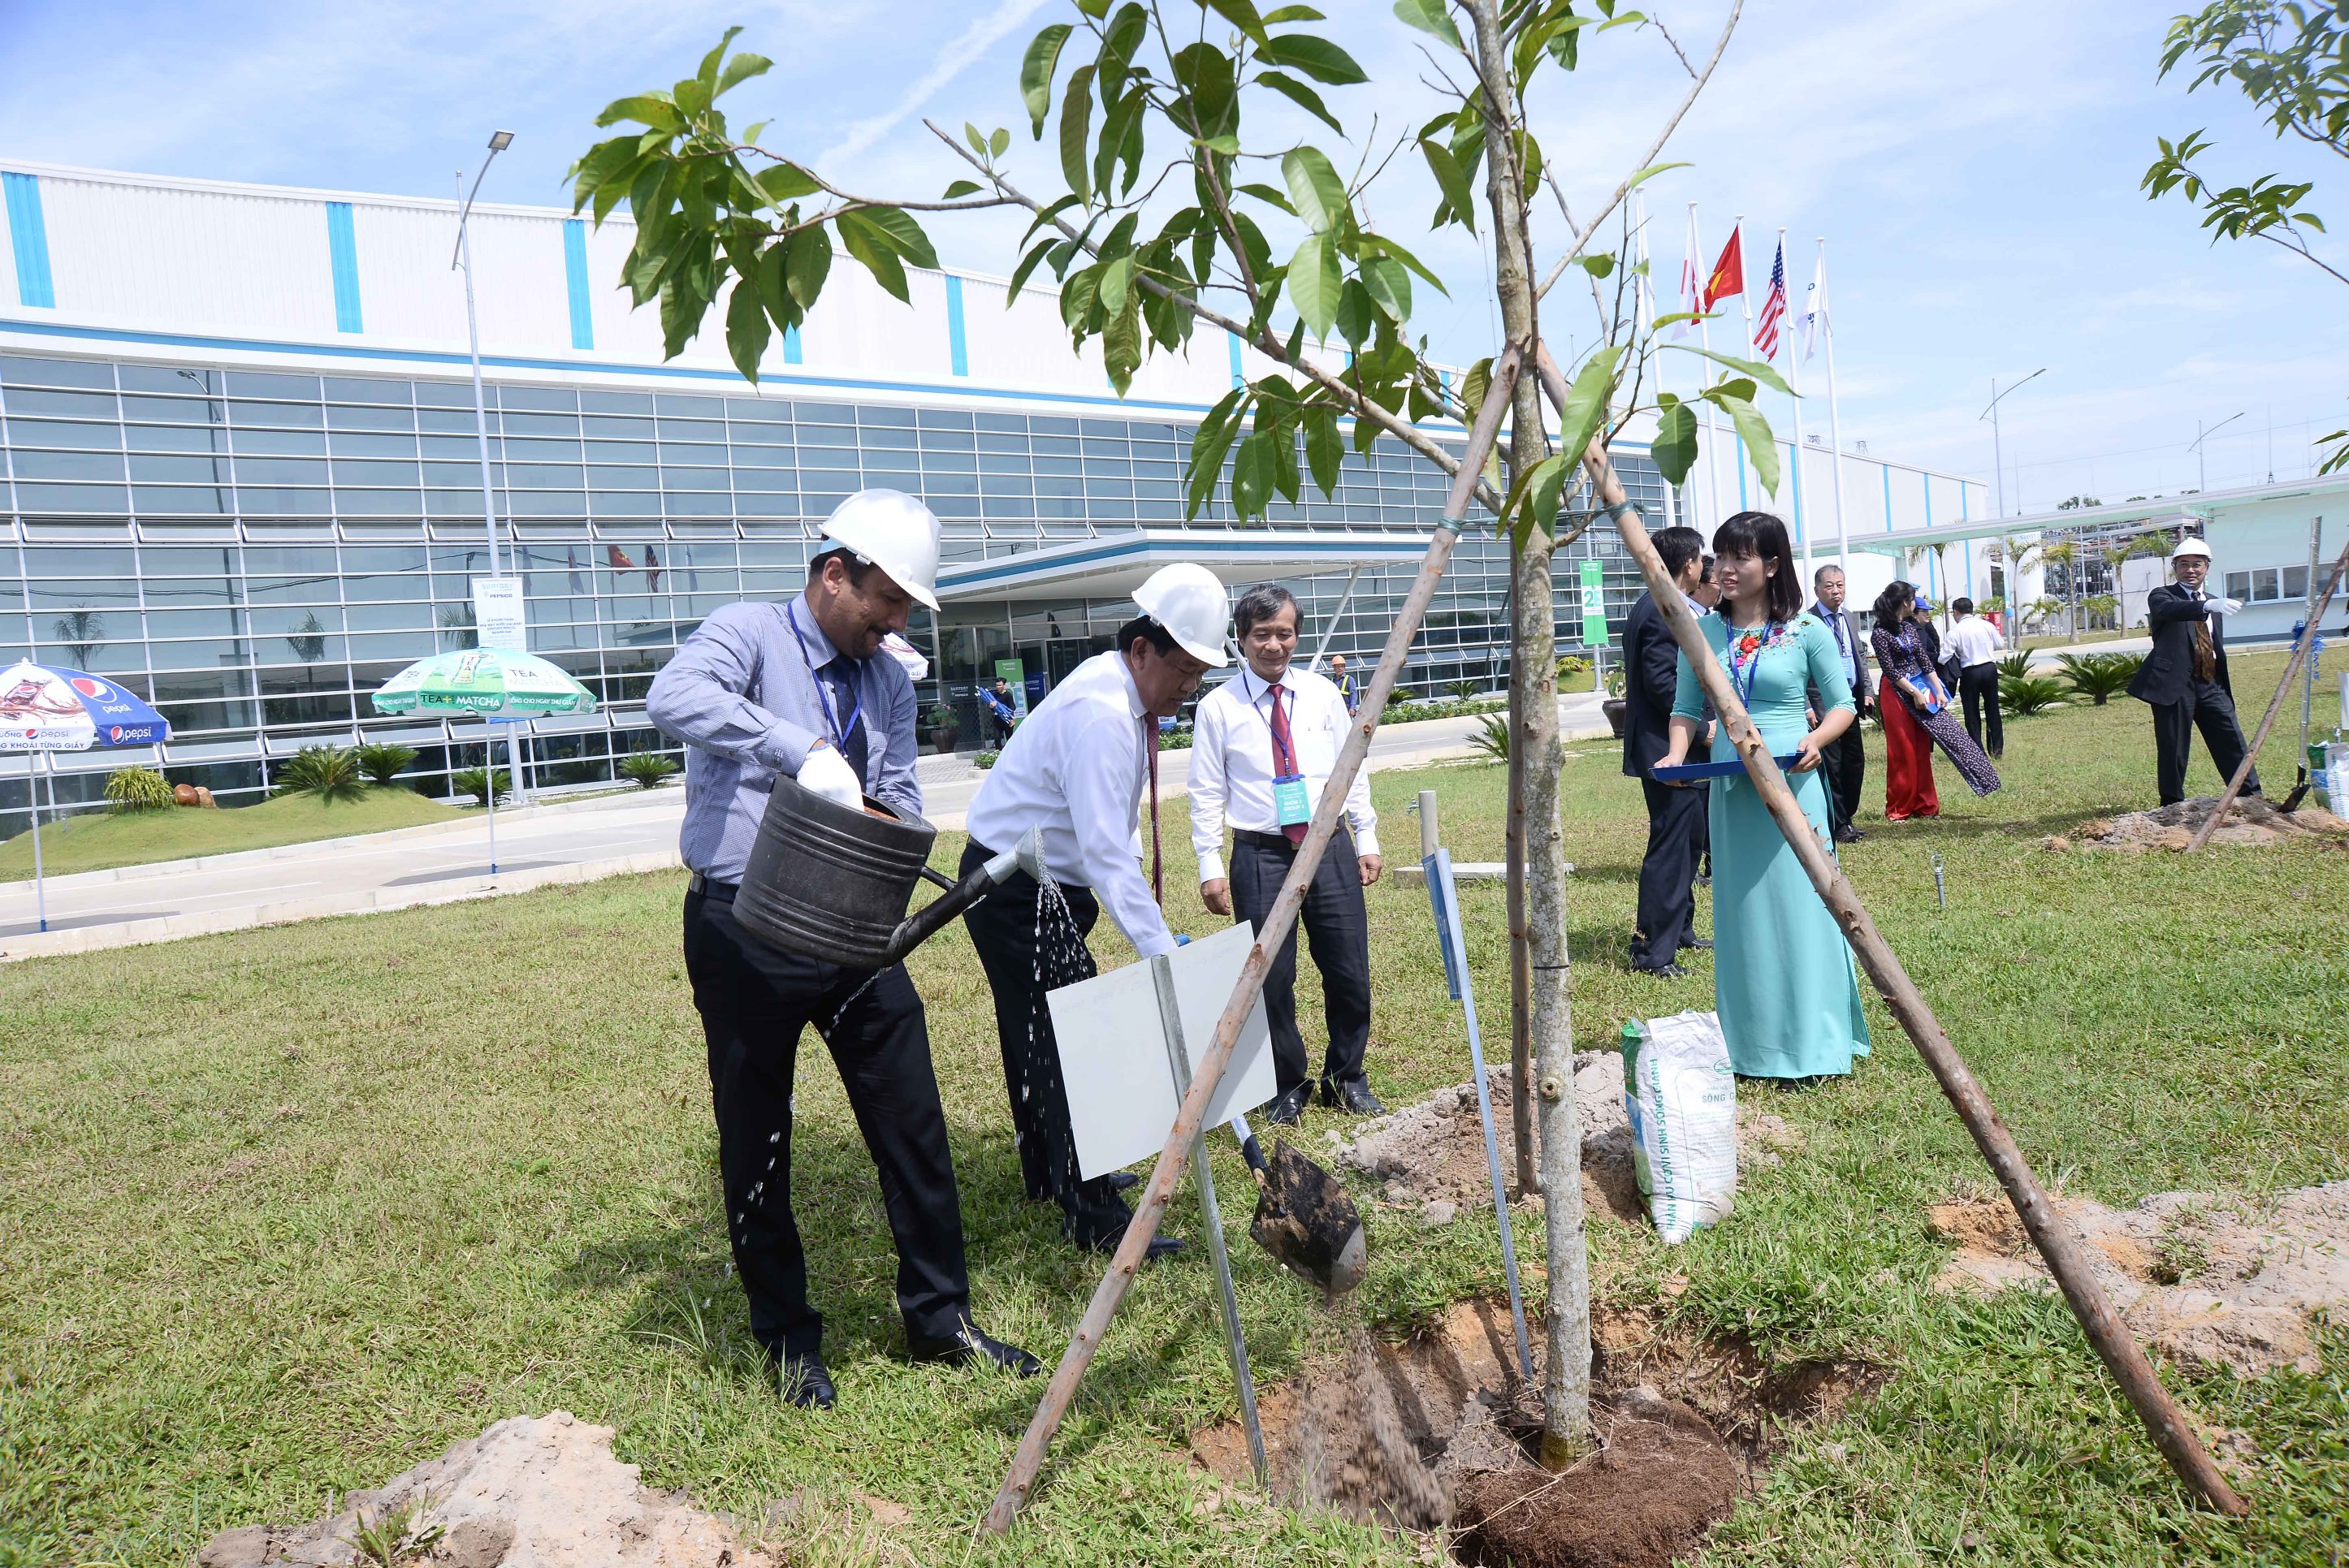 Suntory PepsiCo inaugurates fifth factory in Quang Nam